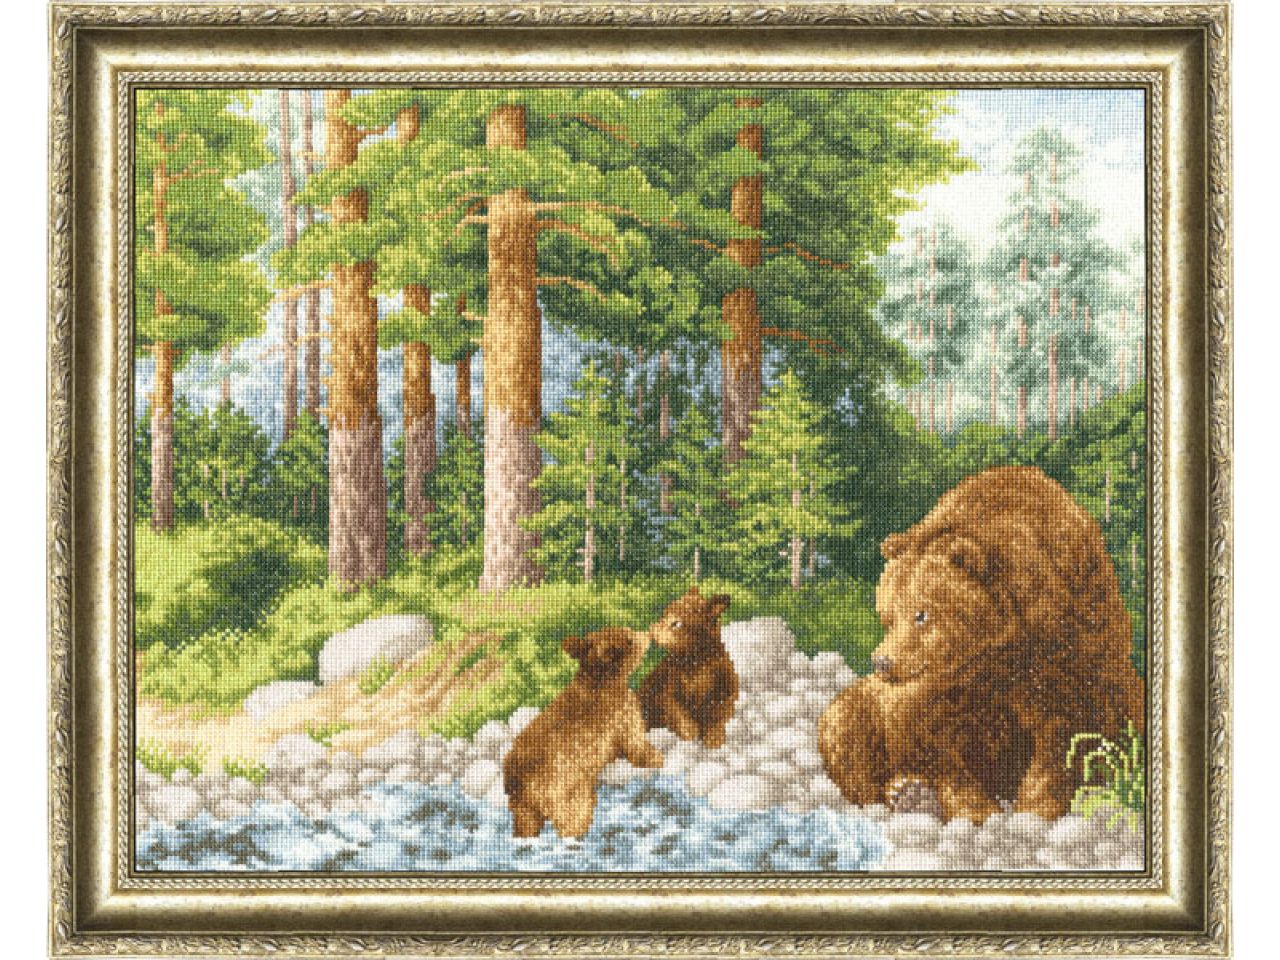 Медведи 